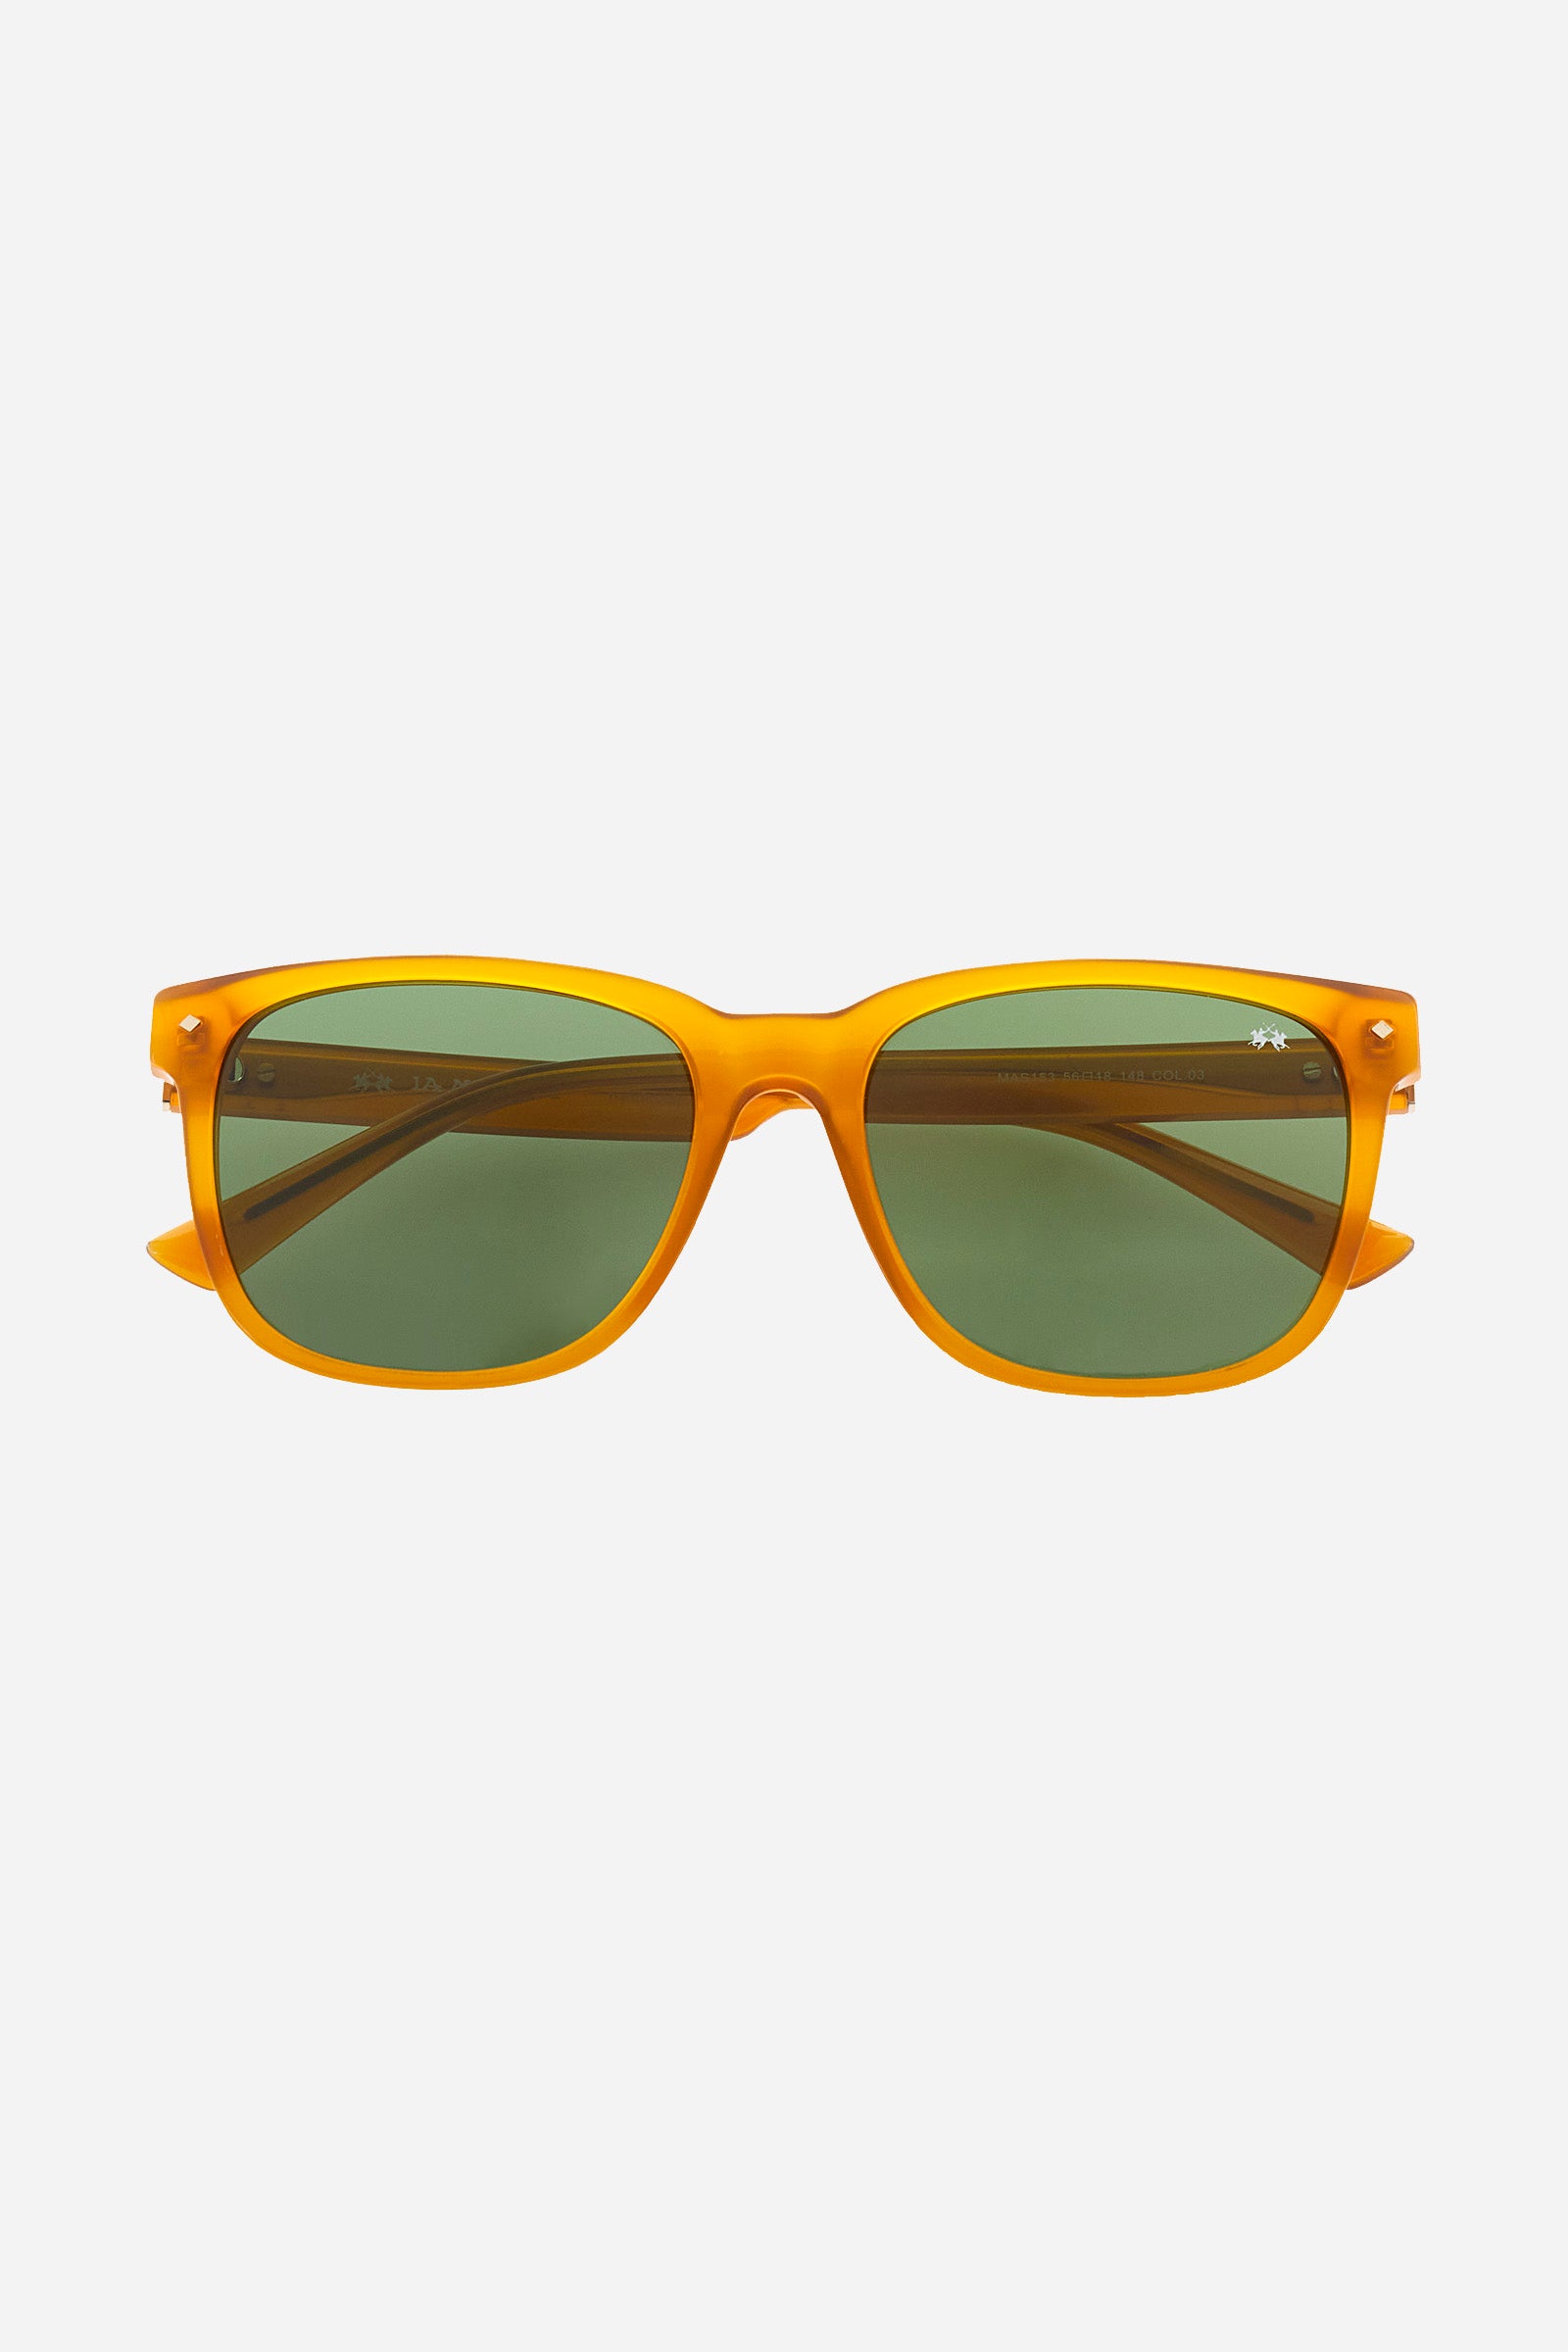 Men’s square sunglasses model